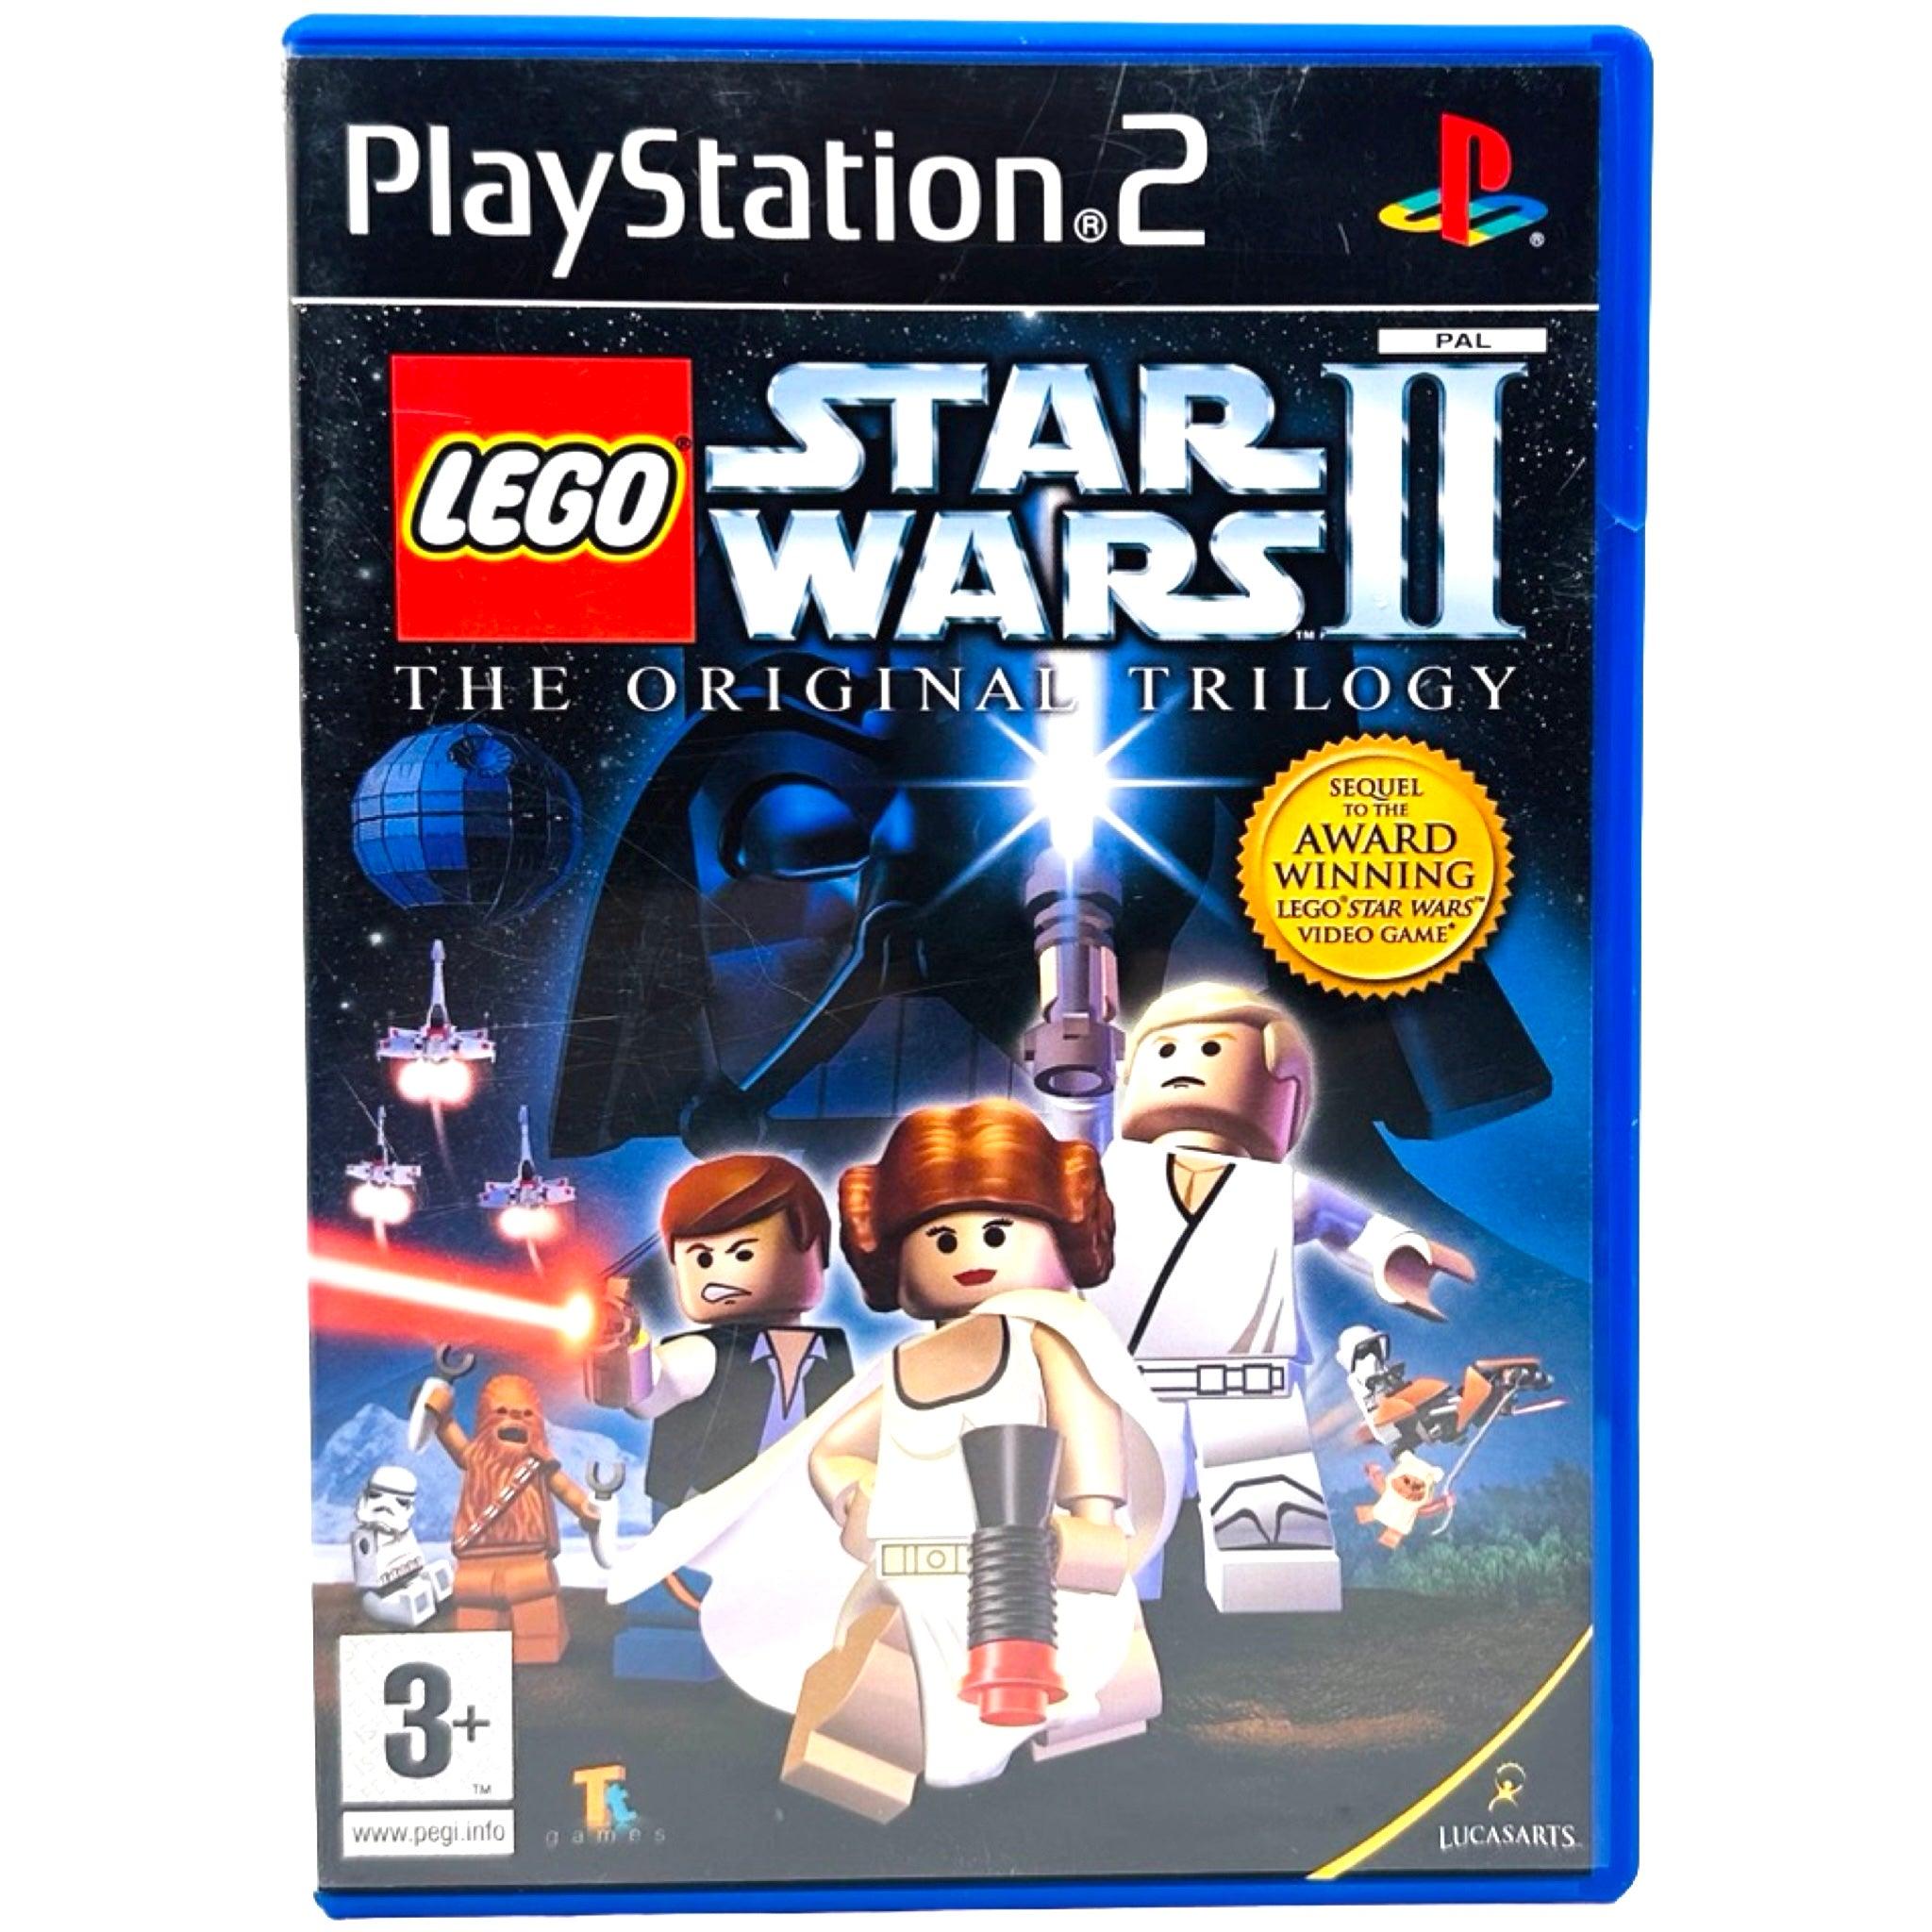 PS2: LEGO Star Wars II Original Trilogy - RetroGaming.no